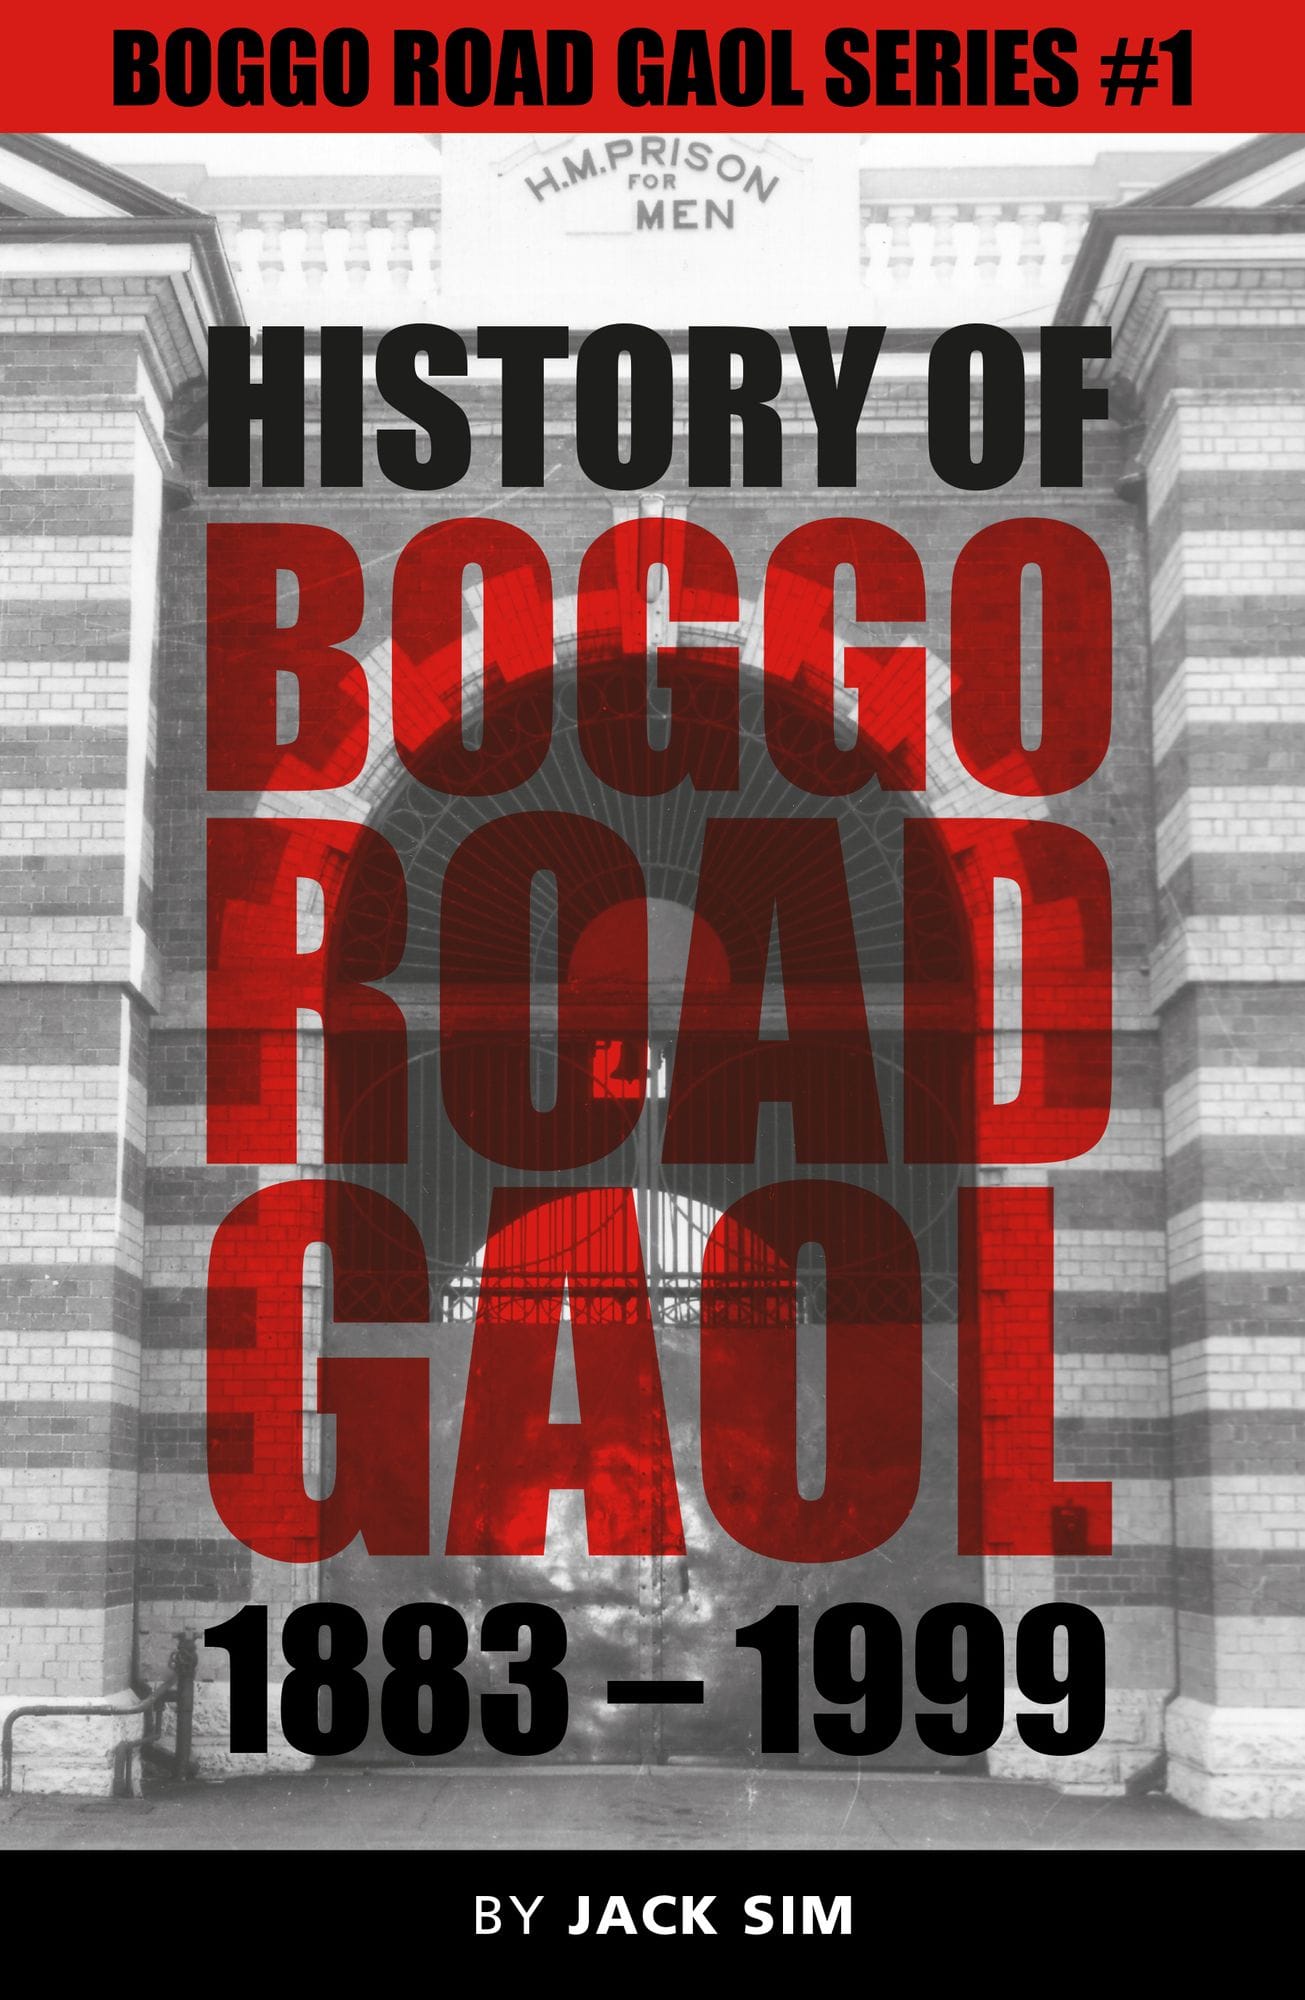 The History of Boggo Road Gaol (Jail) - By Jack Sim